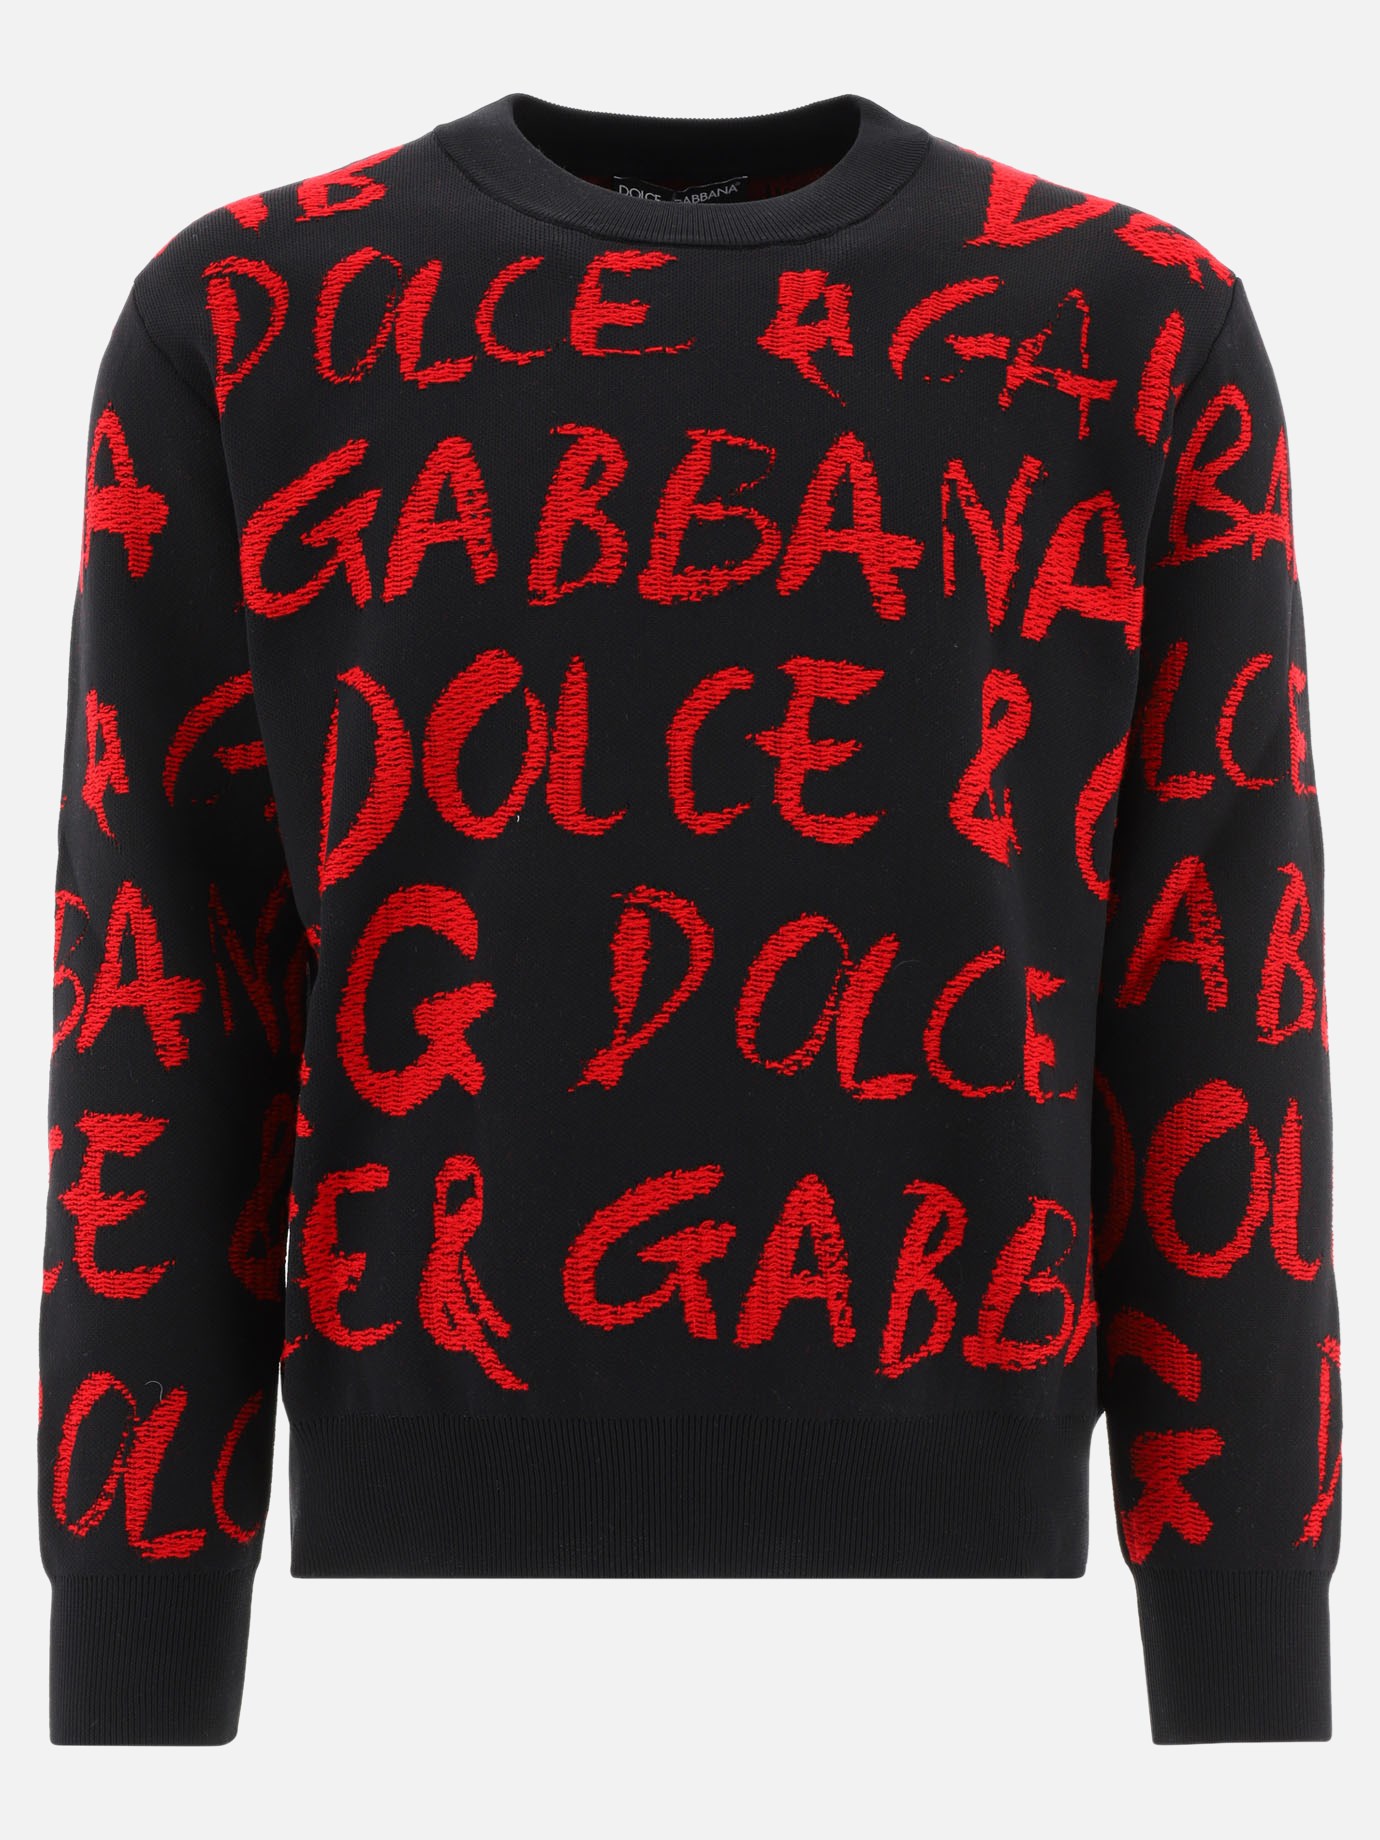 Jacquard sweater by Dolce & Gabbana